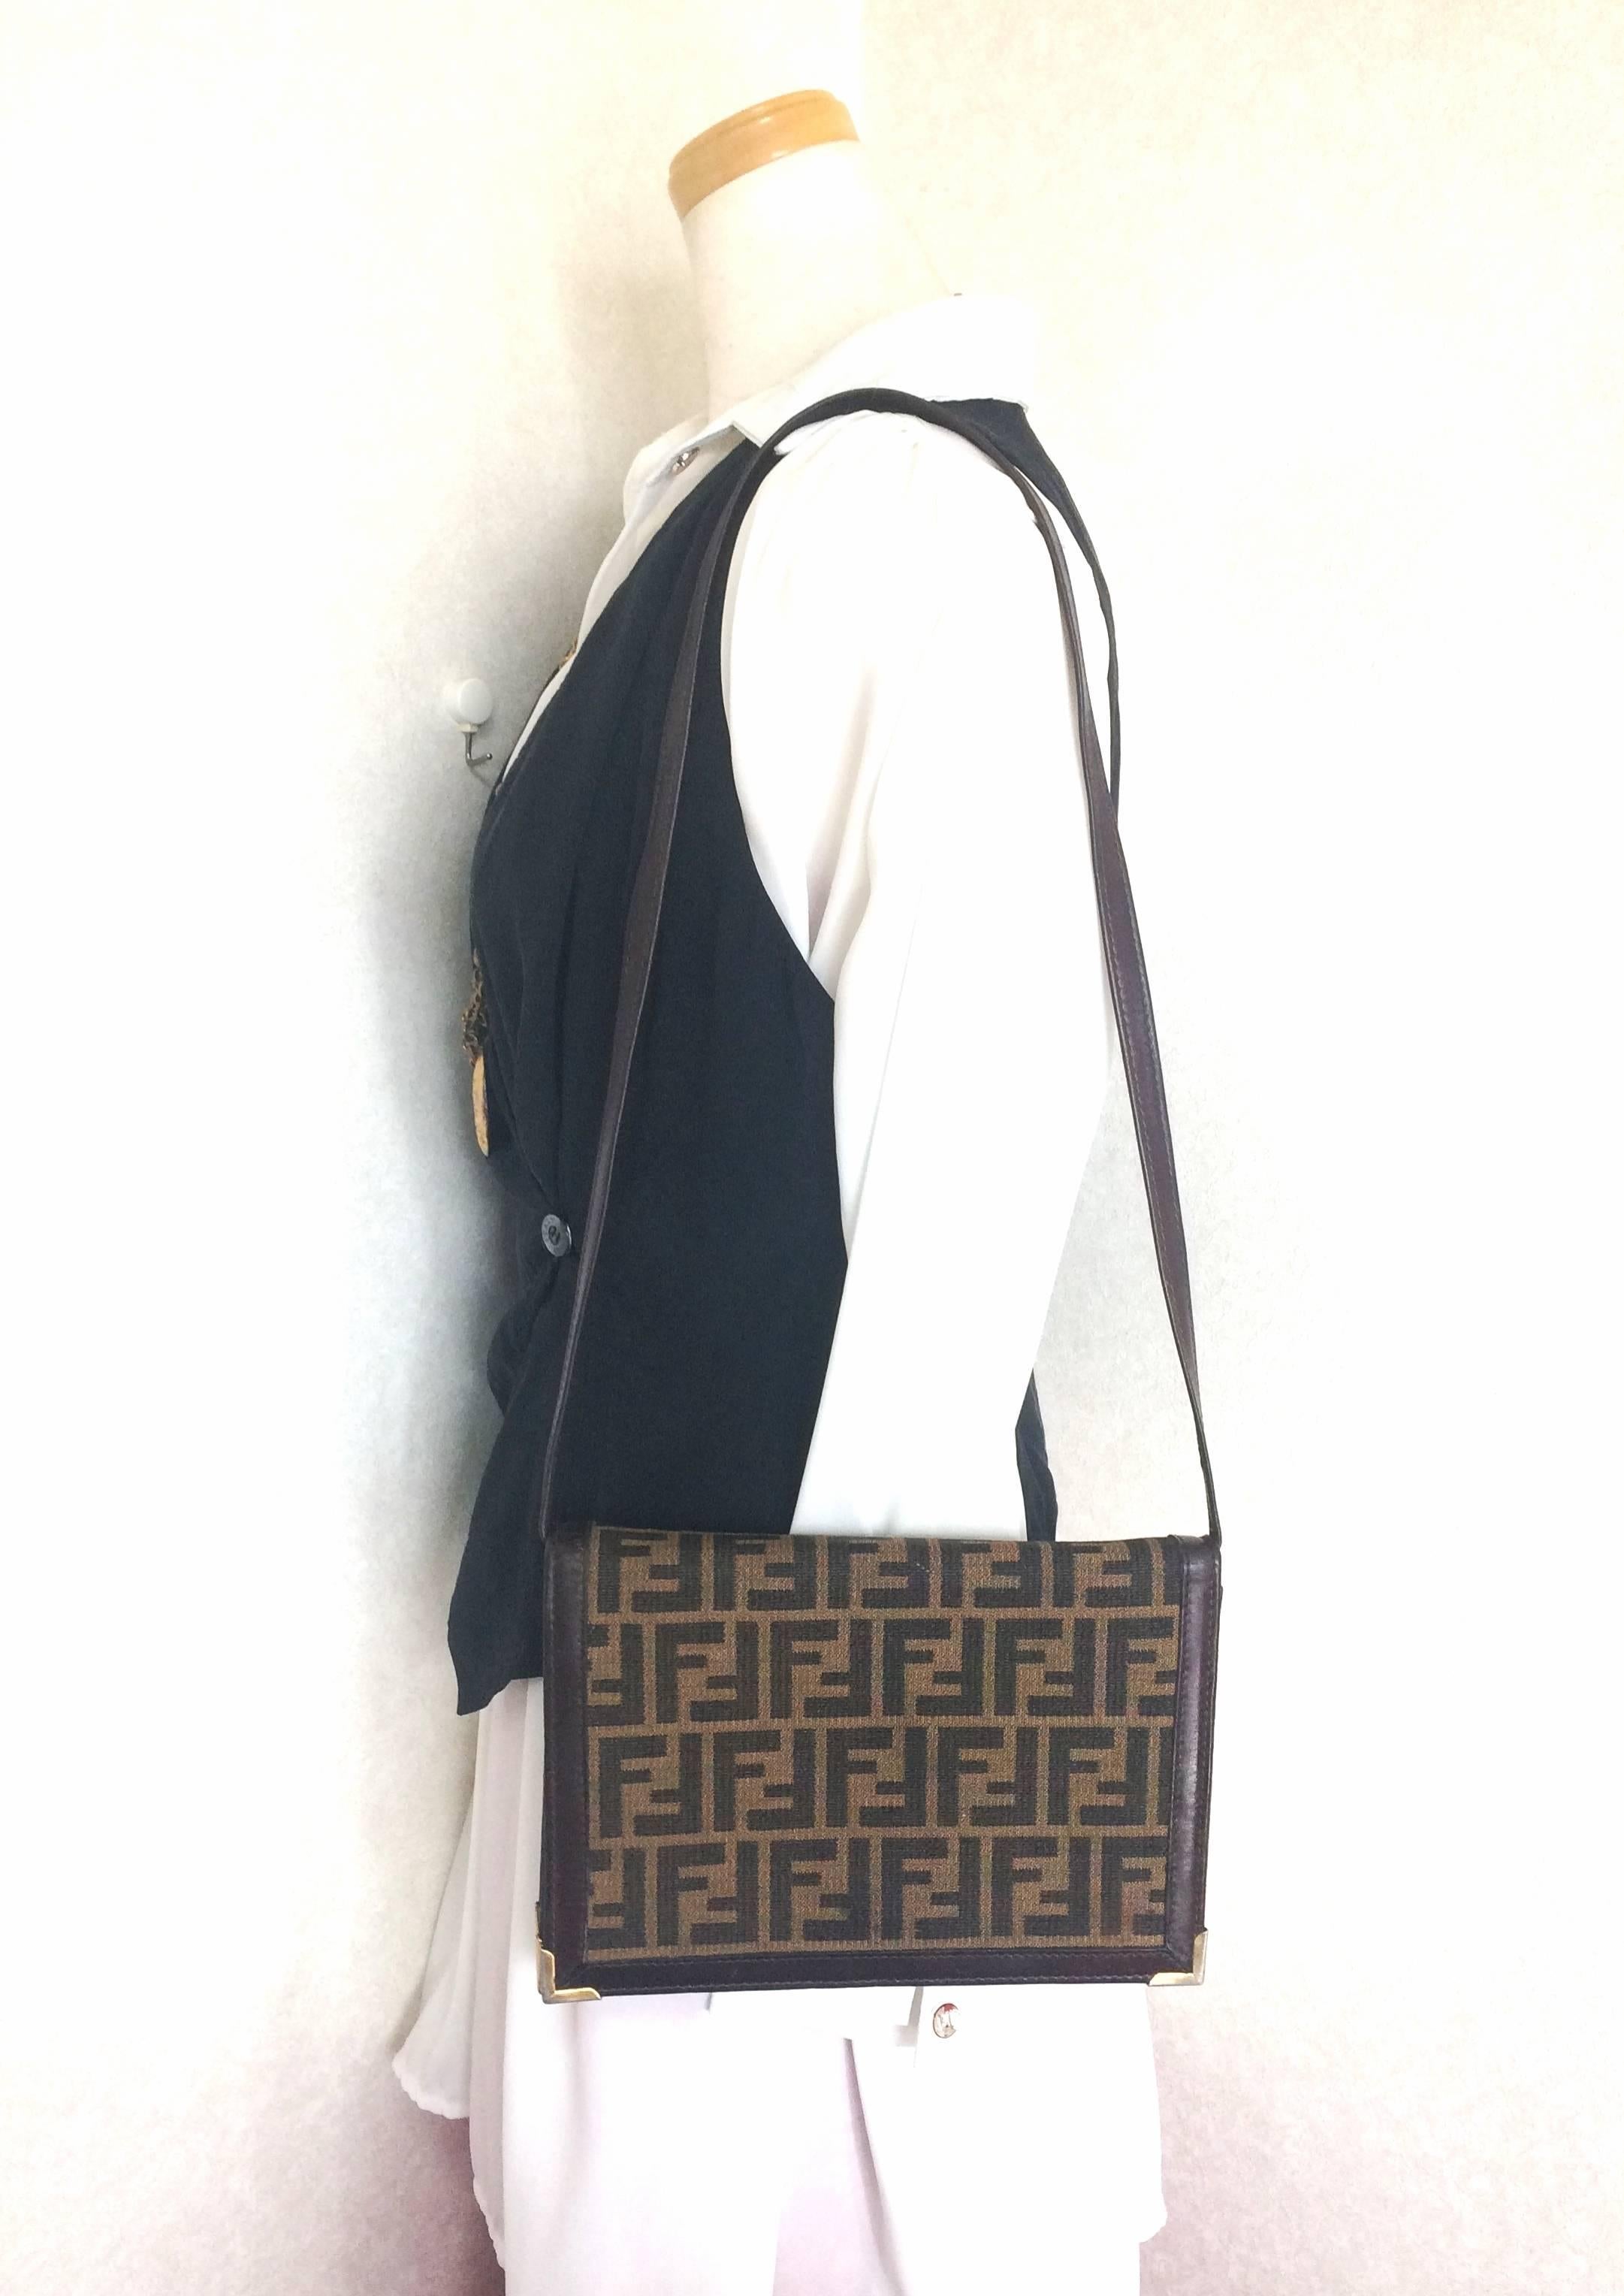 Vintage Fendi jacquard fabric shoulder purse, clutch bag with leather trimmings. 2